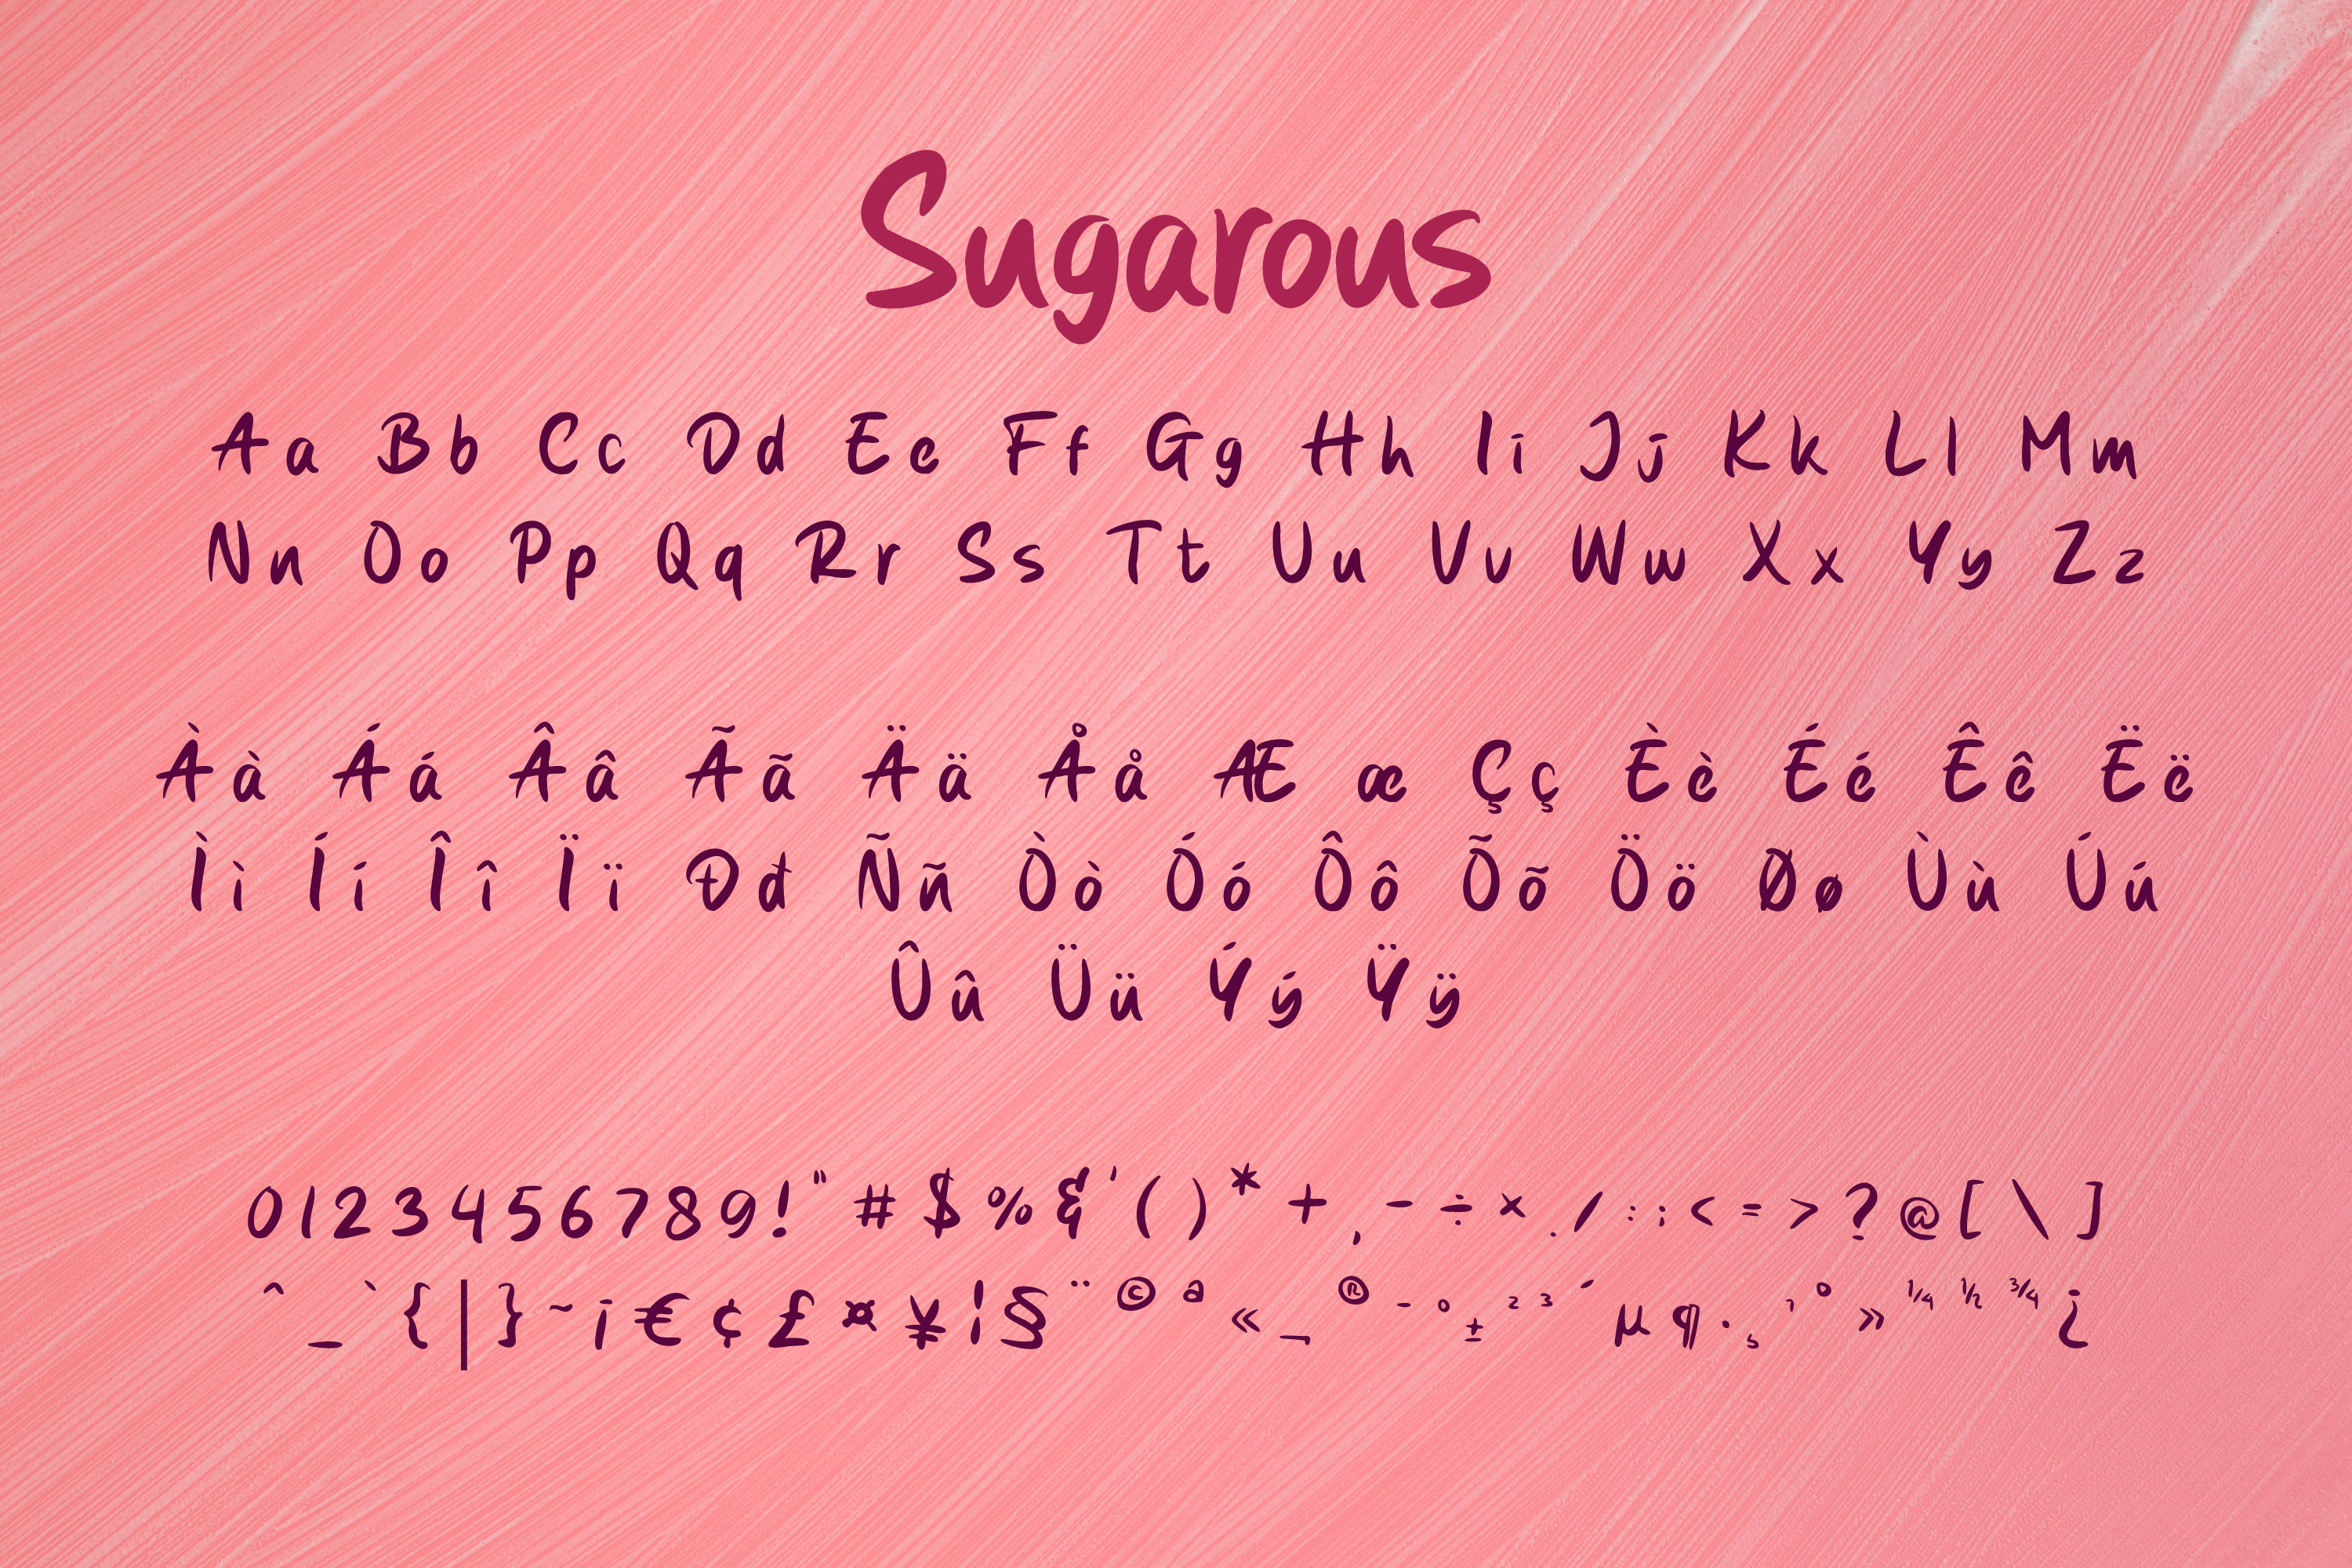 Sugarous